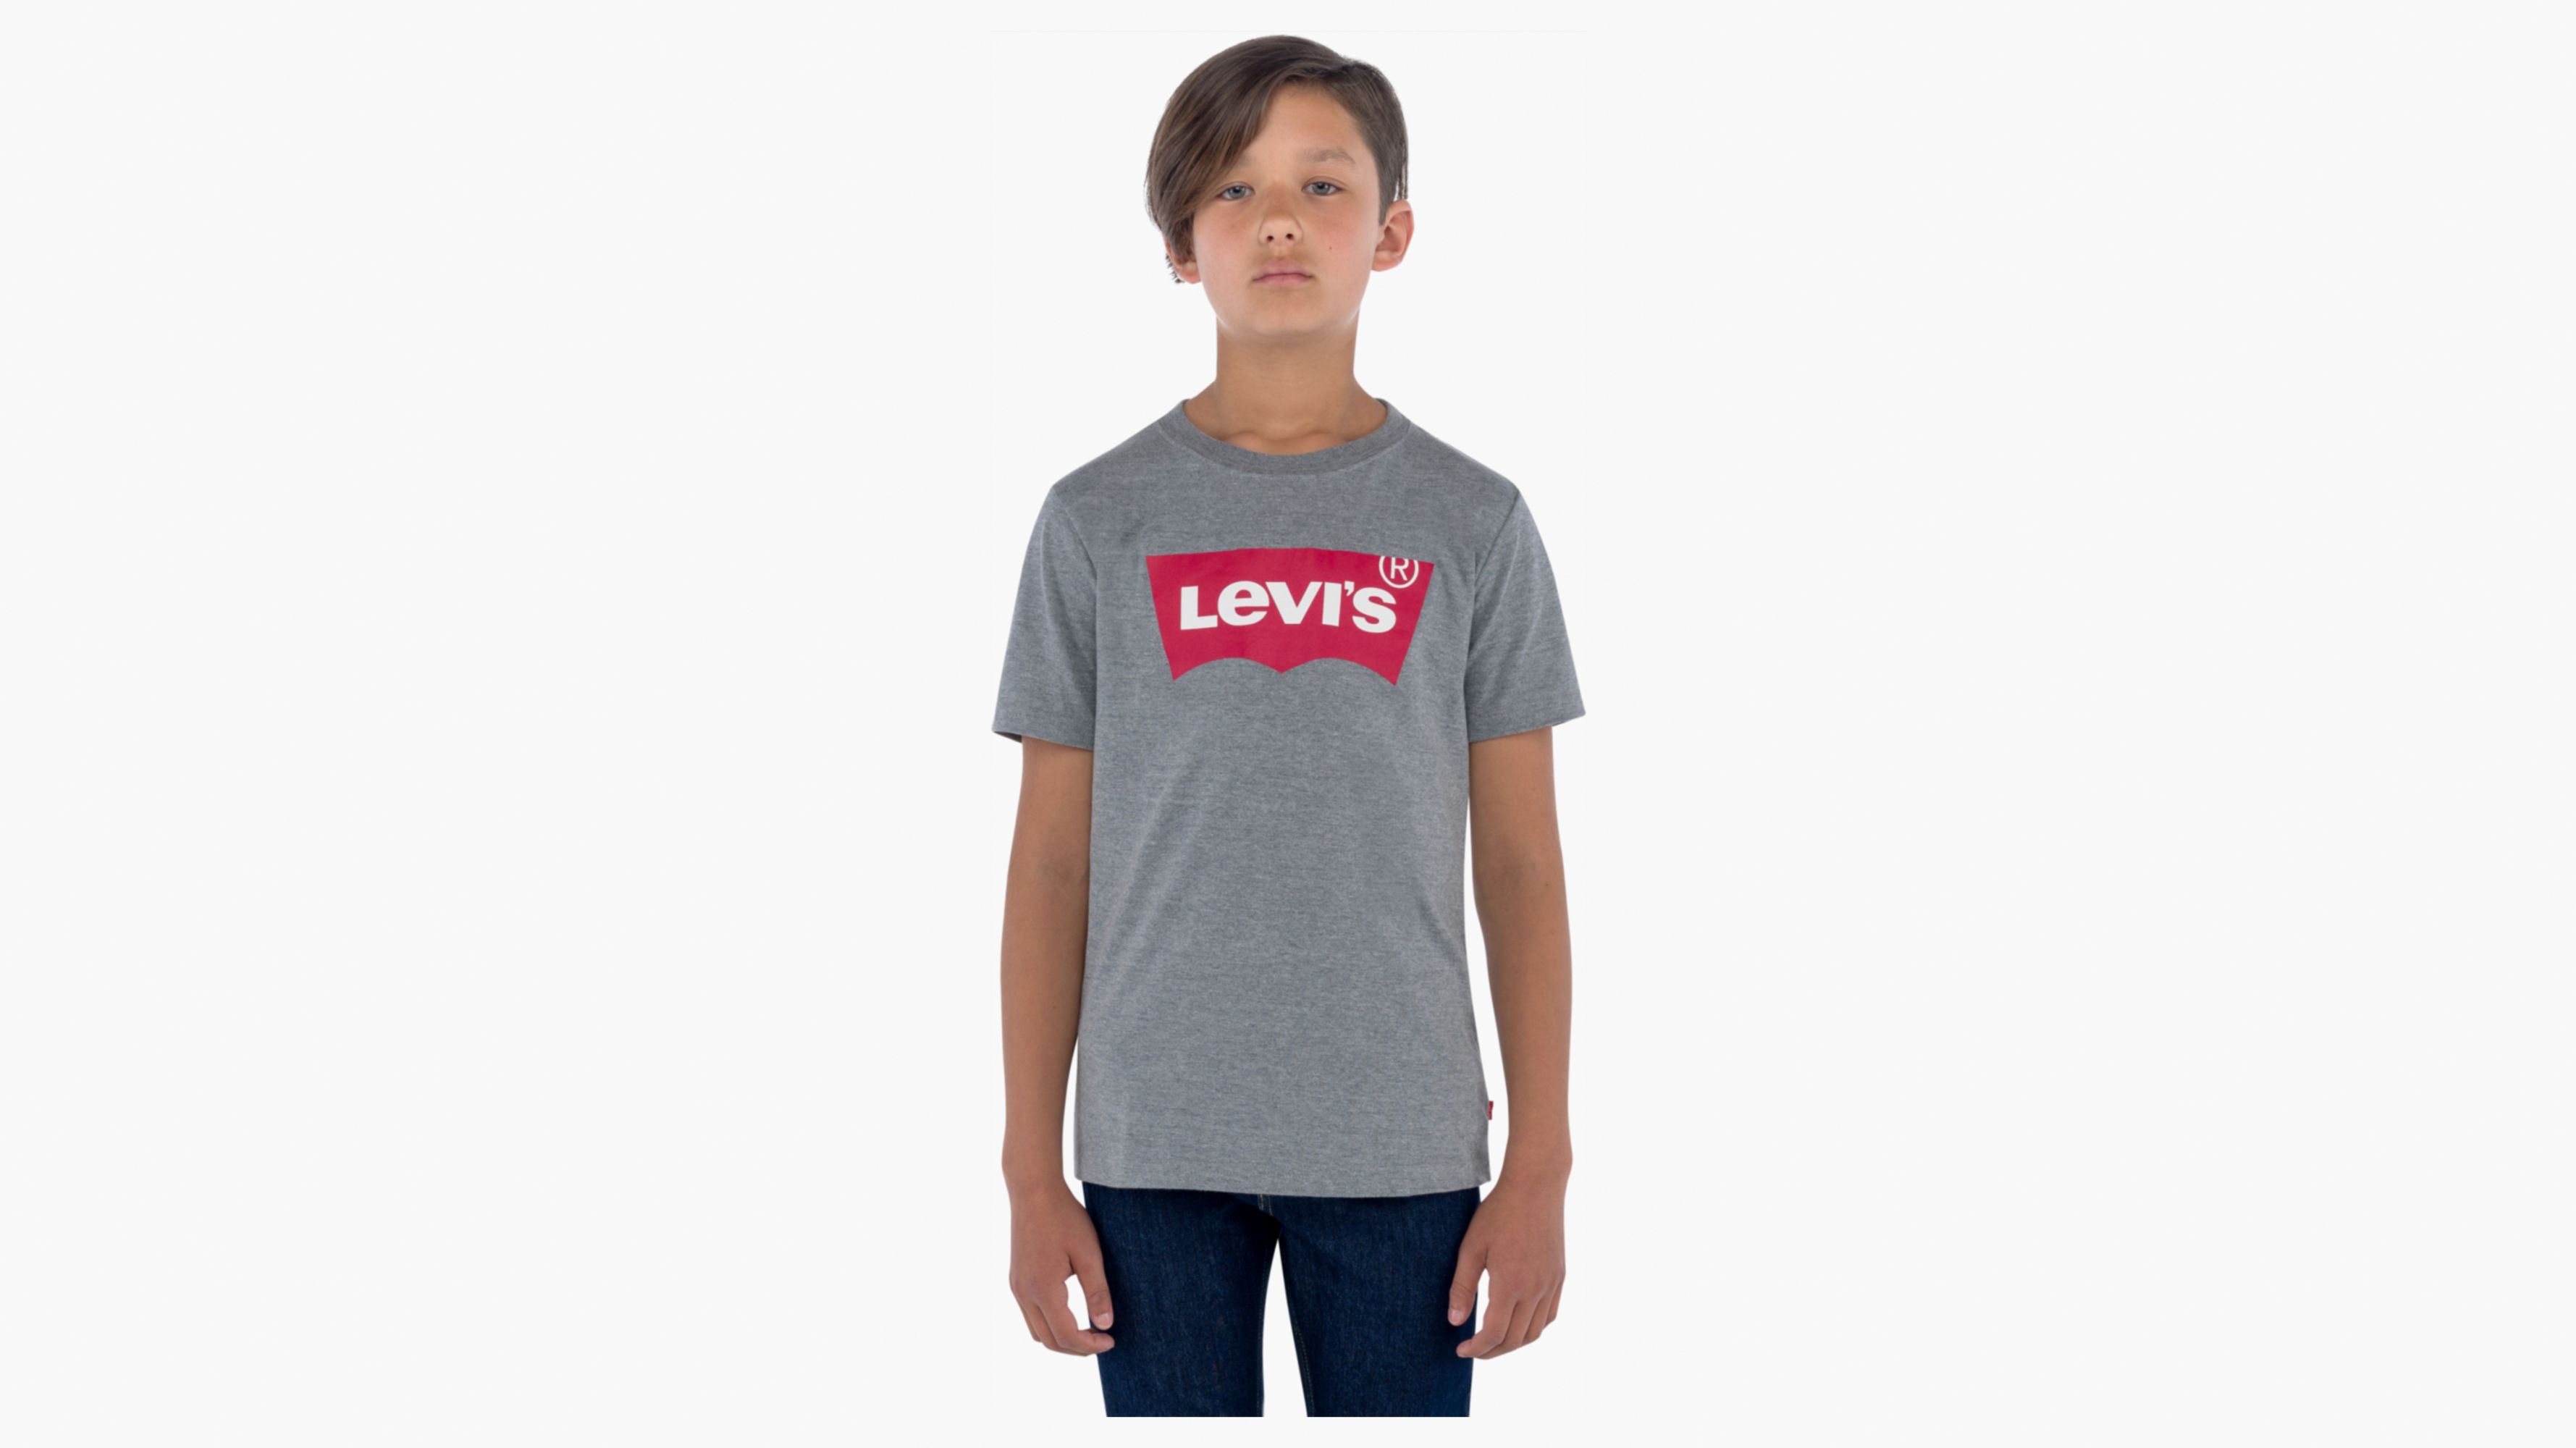 levis shirt grey